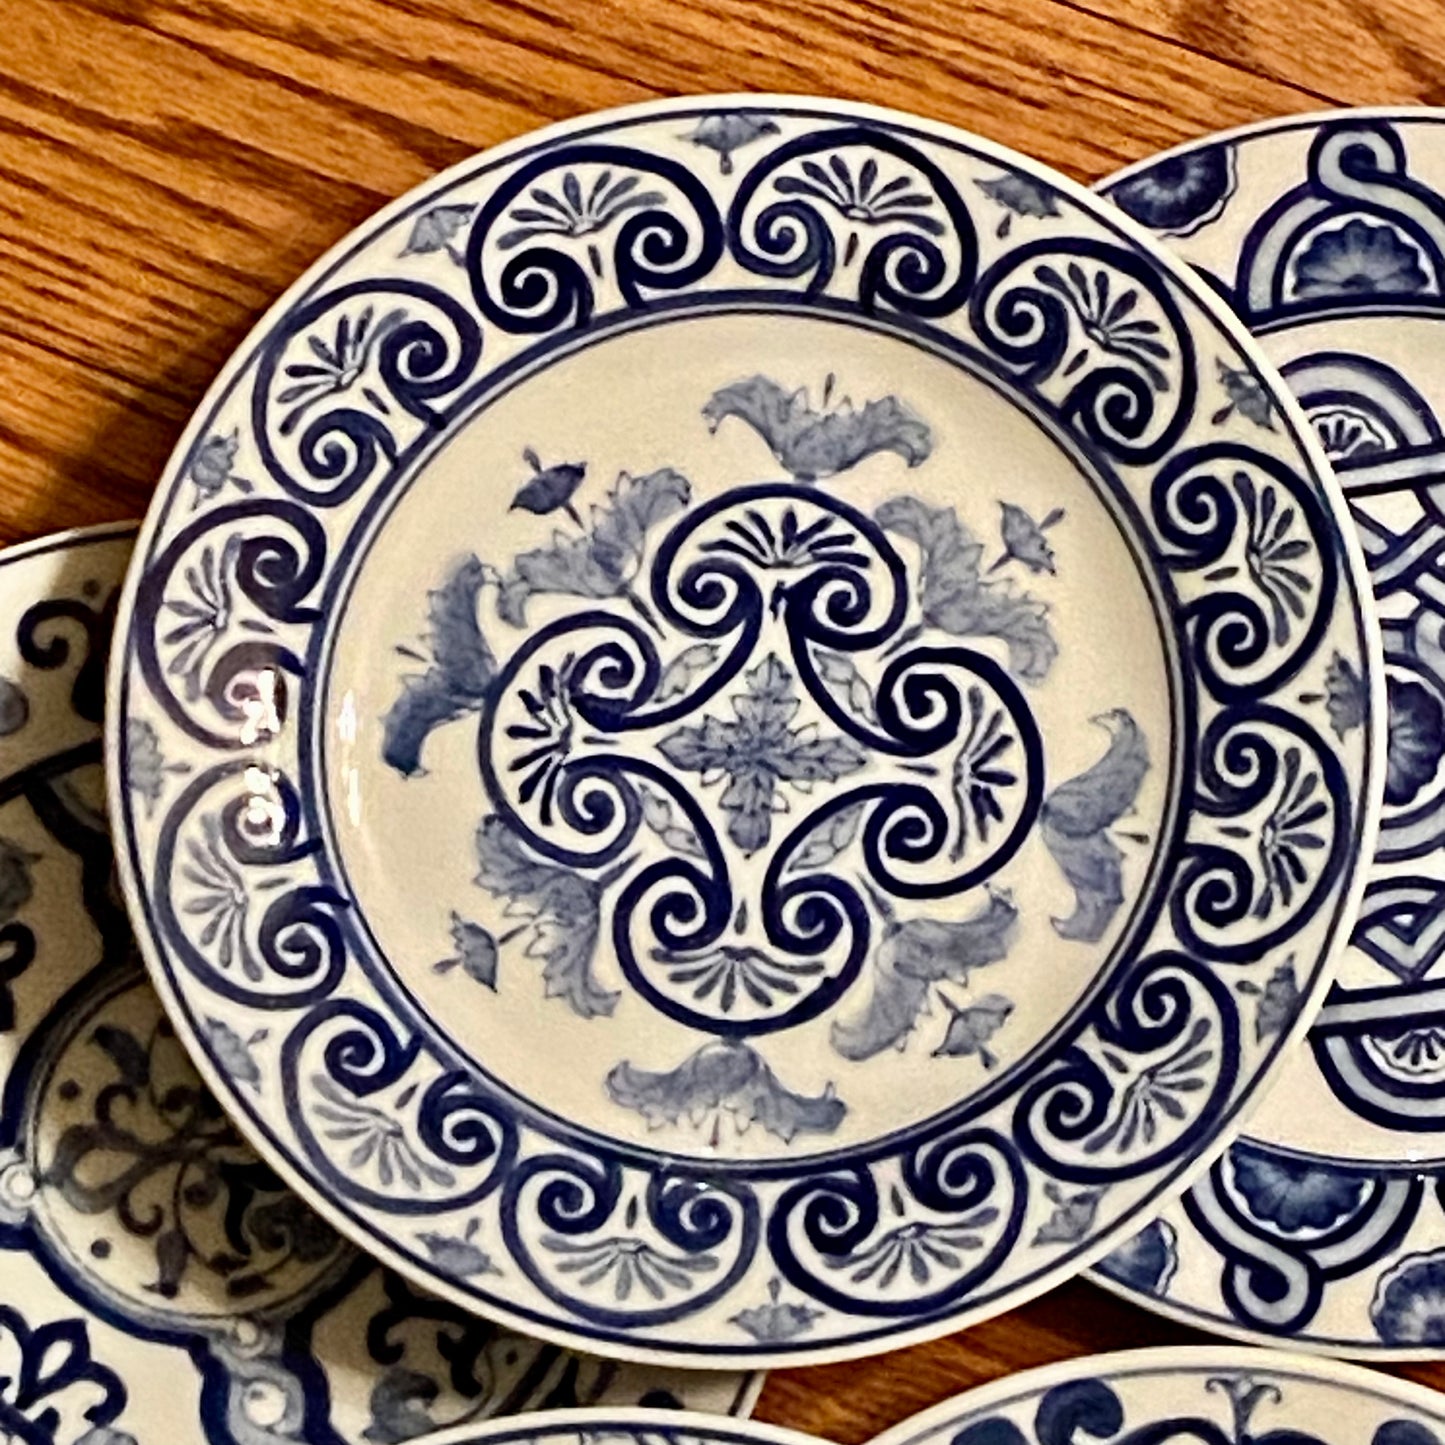 Set of 6 vintage blue & white designer geometric fretwork salad plates